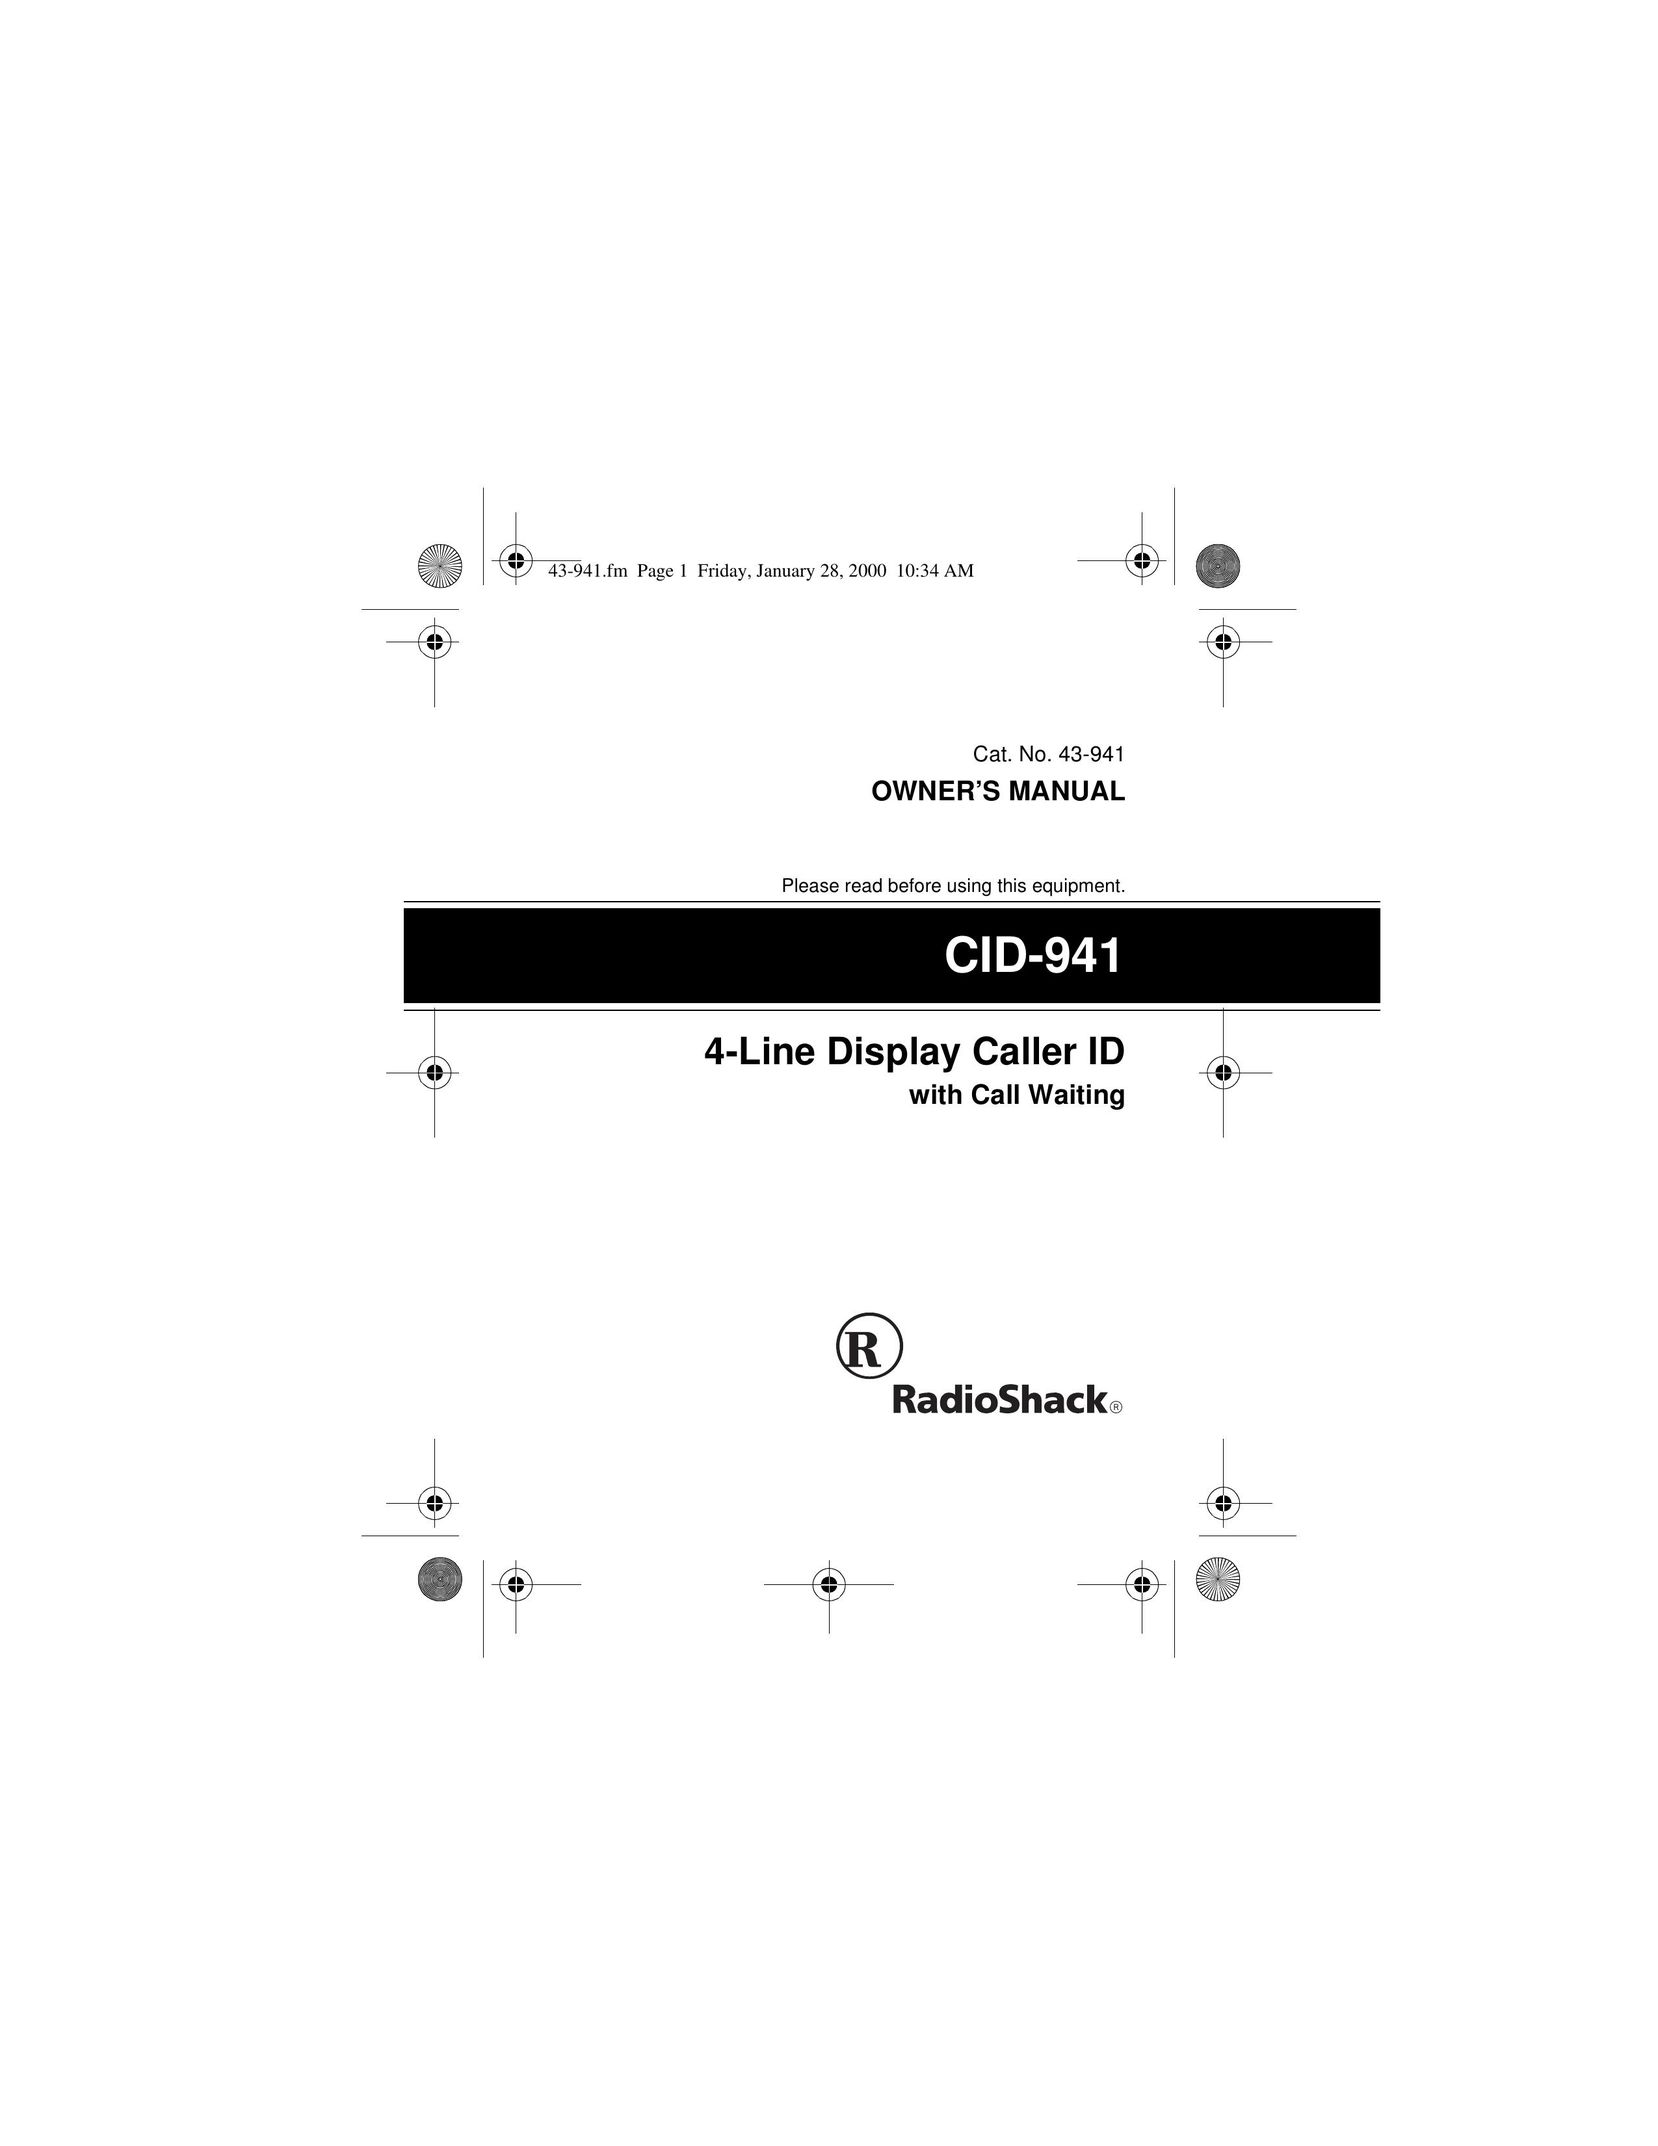 Radio Shack CID-941 Caller ID Box User Manual (Page 1)